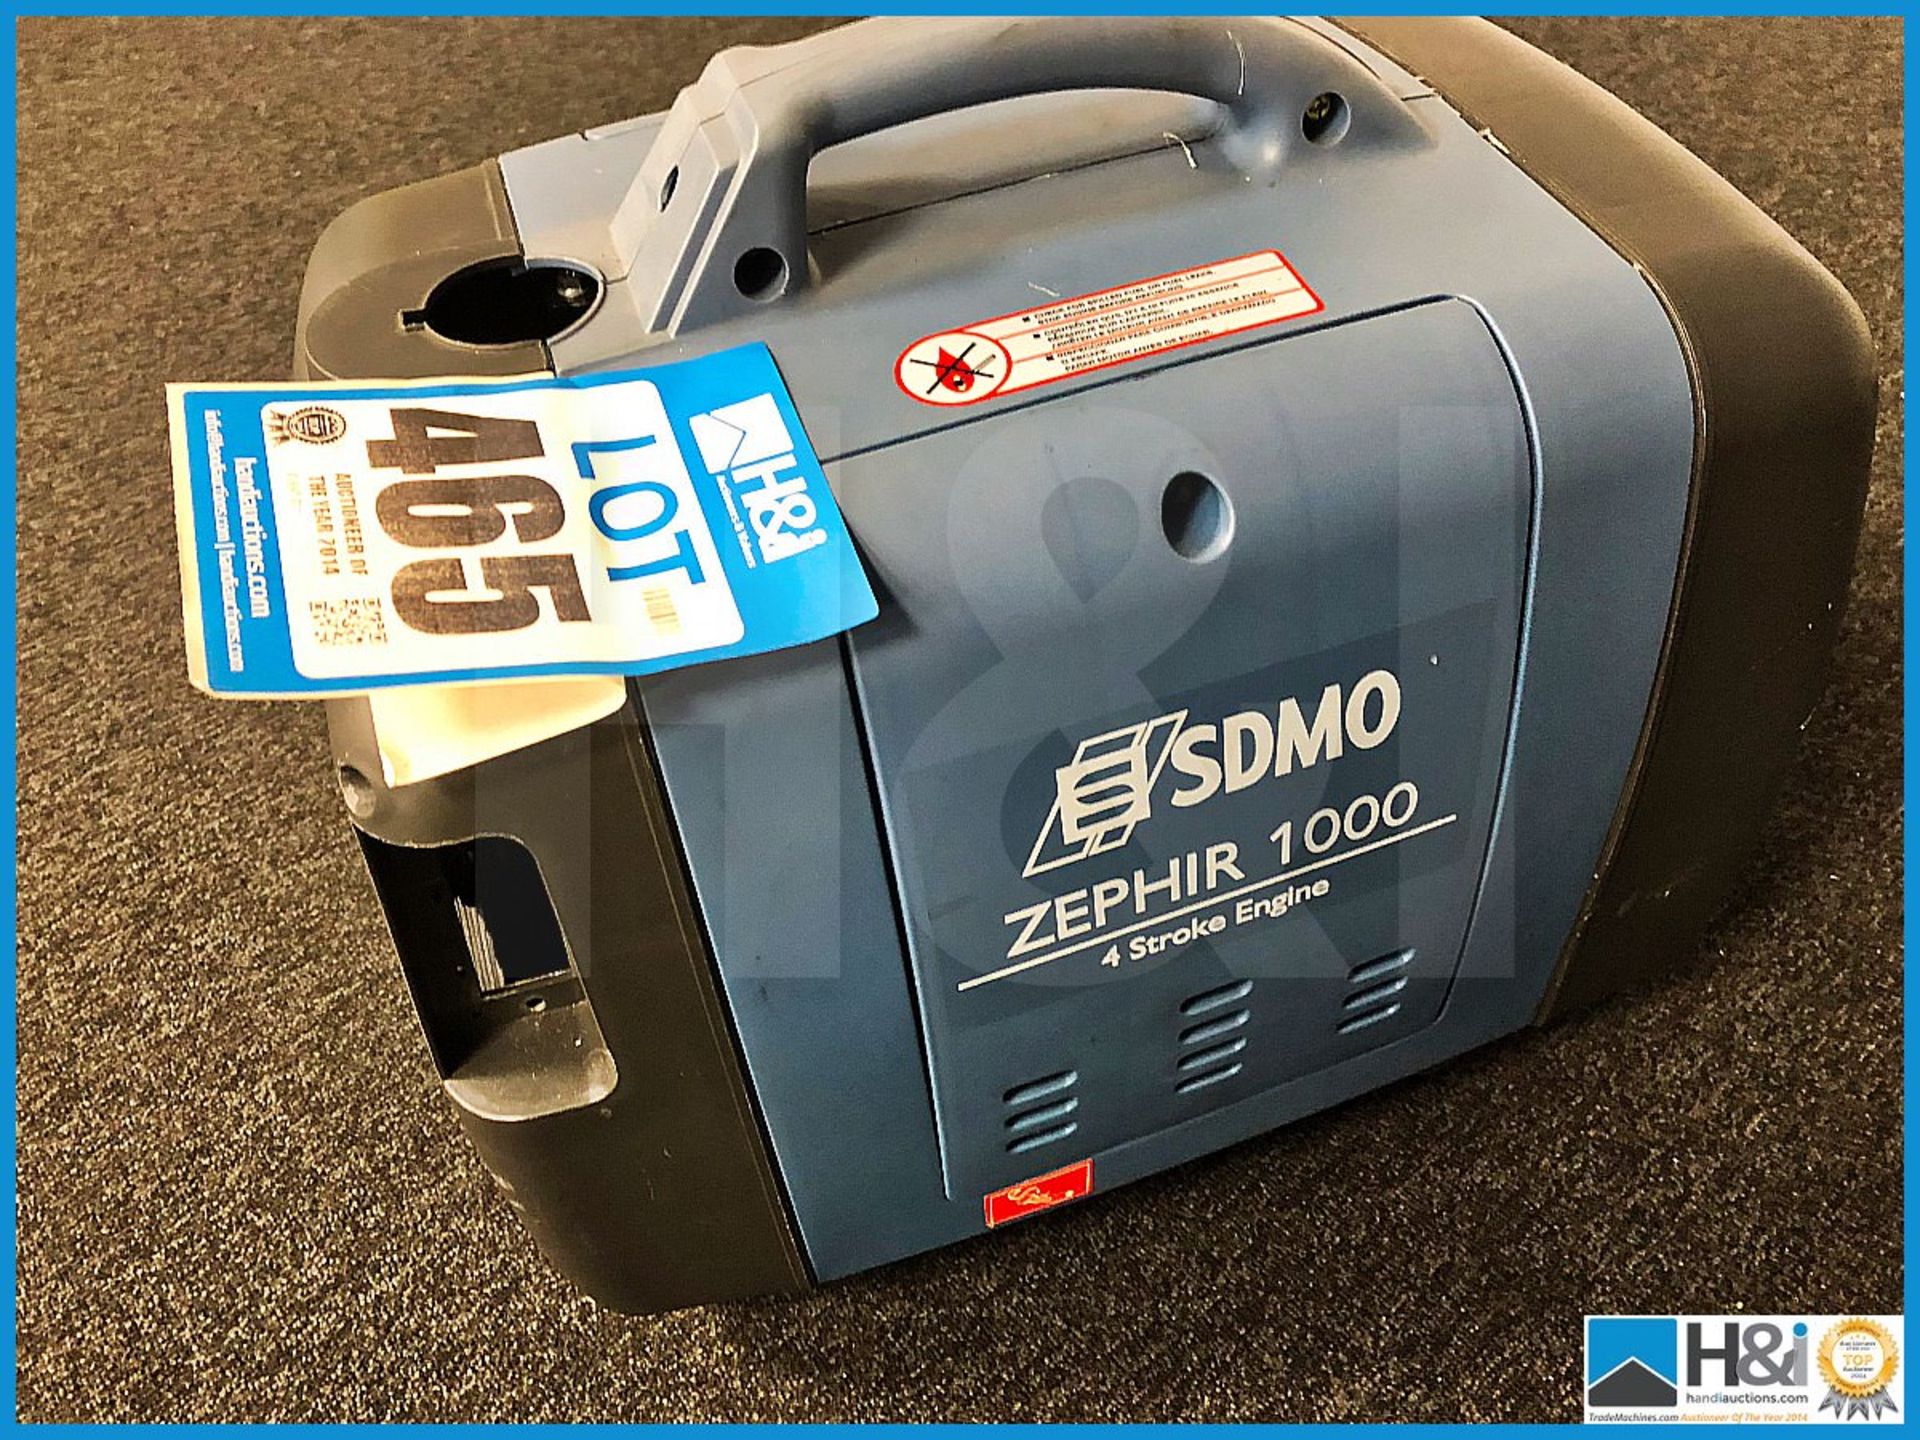 SDMO Zephir 1000 4 stroke engine generator. Advised has fuel tank missing. - Image 2 of 5